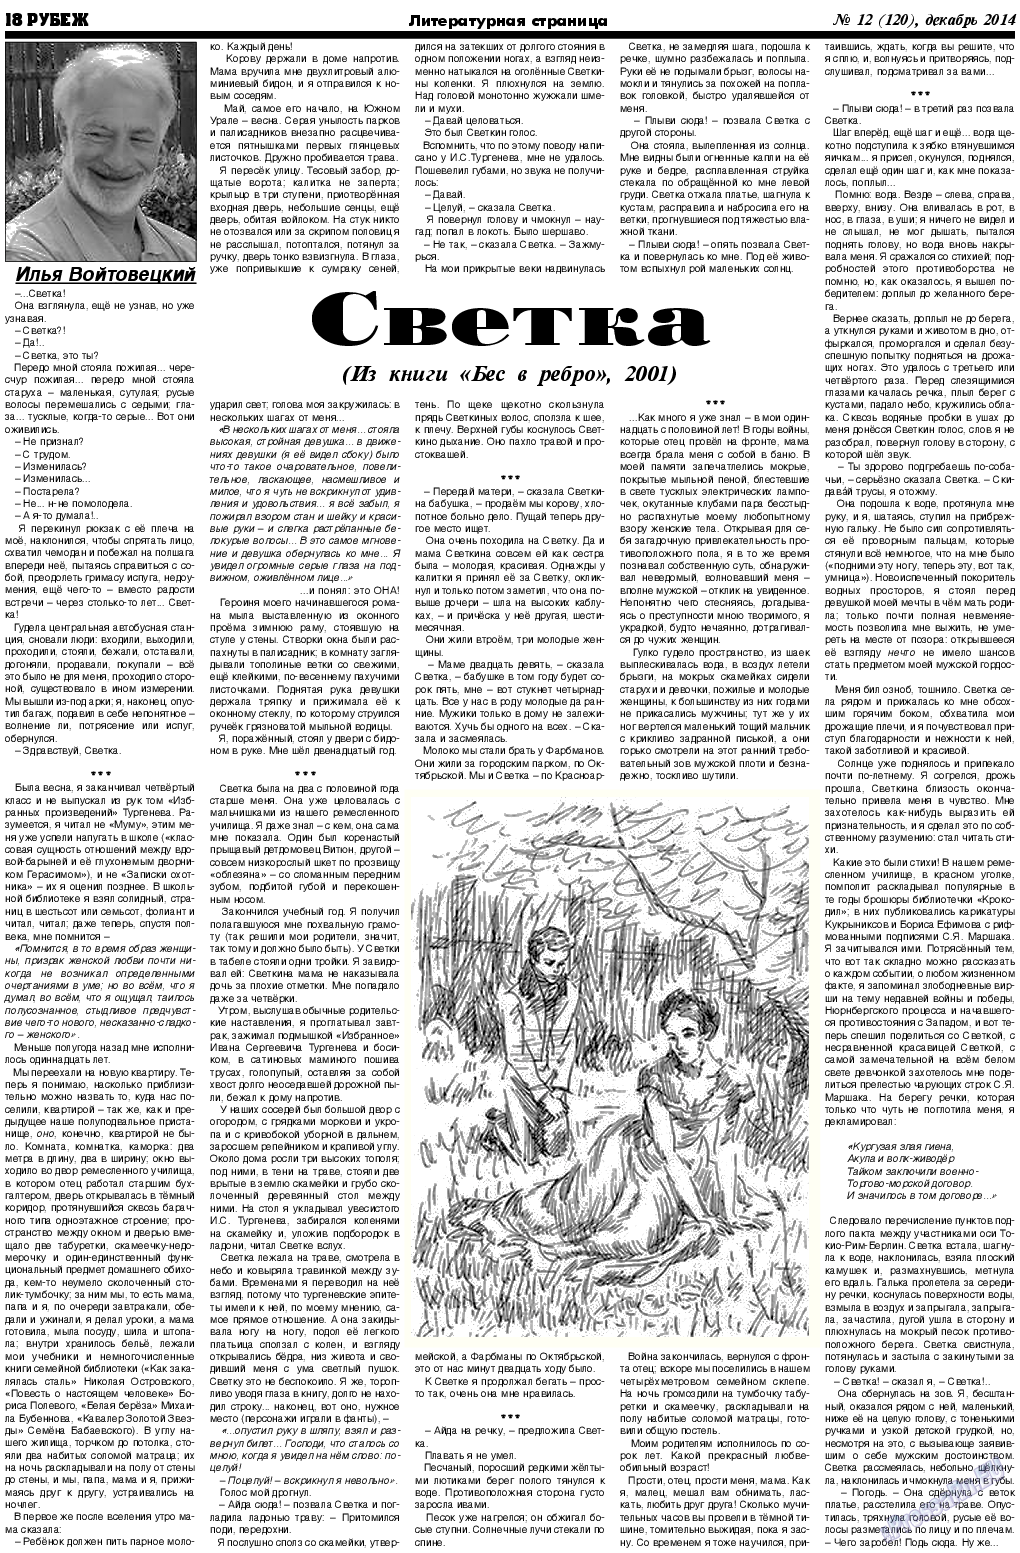 Рубеж, газета. 2014 №12 стр.18